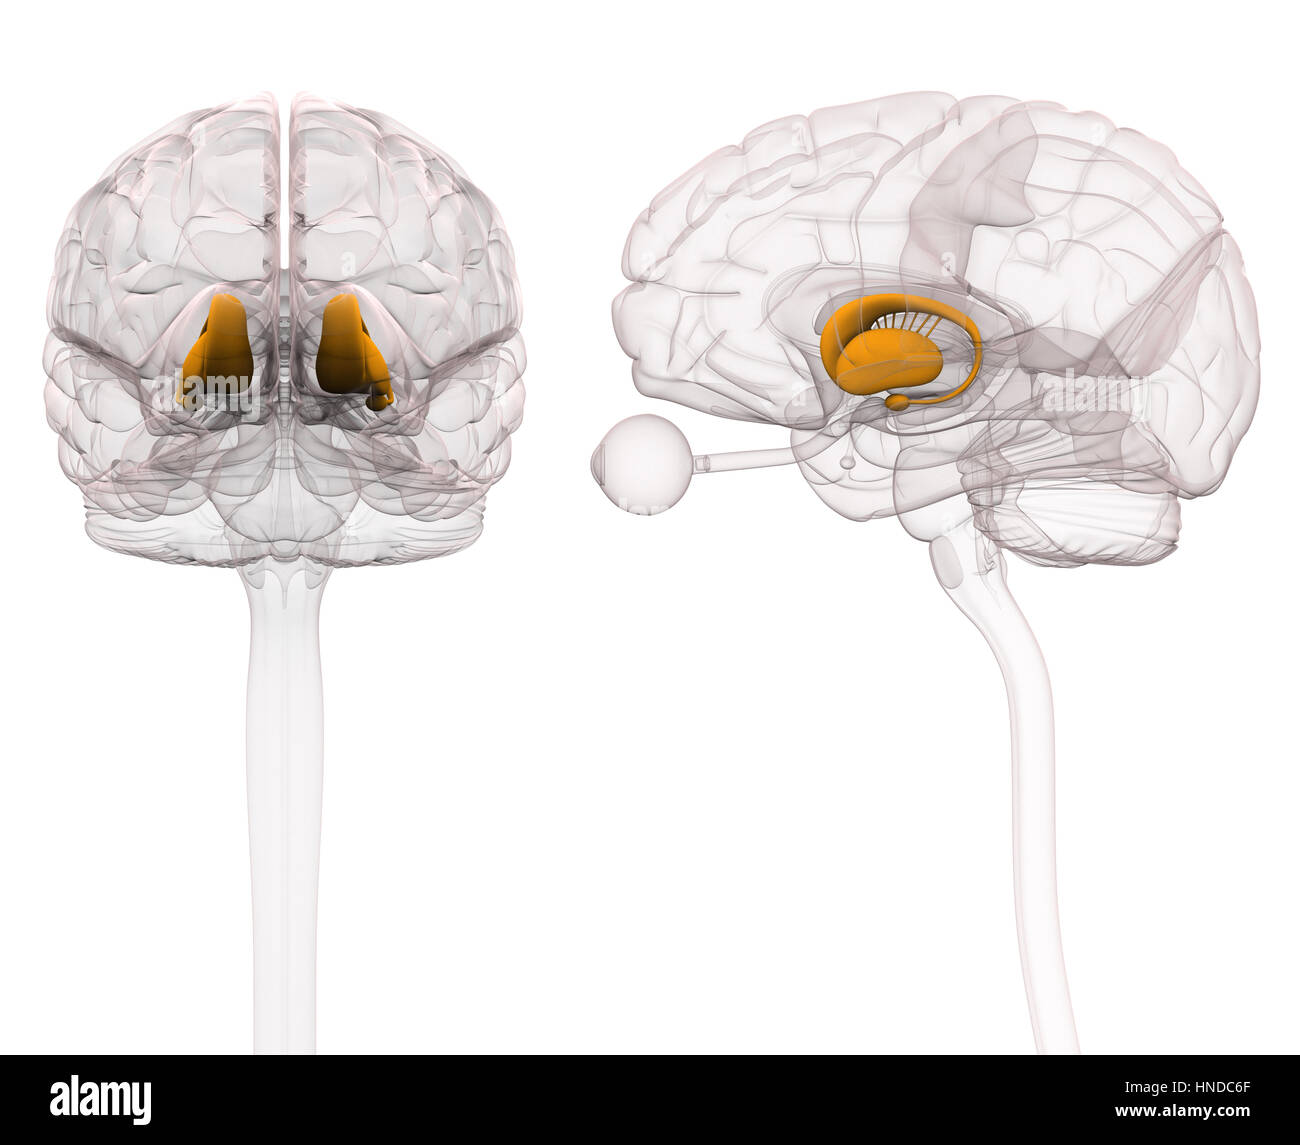 Basal Ganglia - anatomie du cerveau - 3d illustration Photo Stock - Alamy